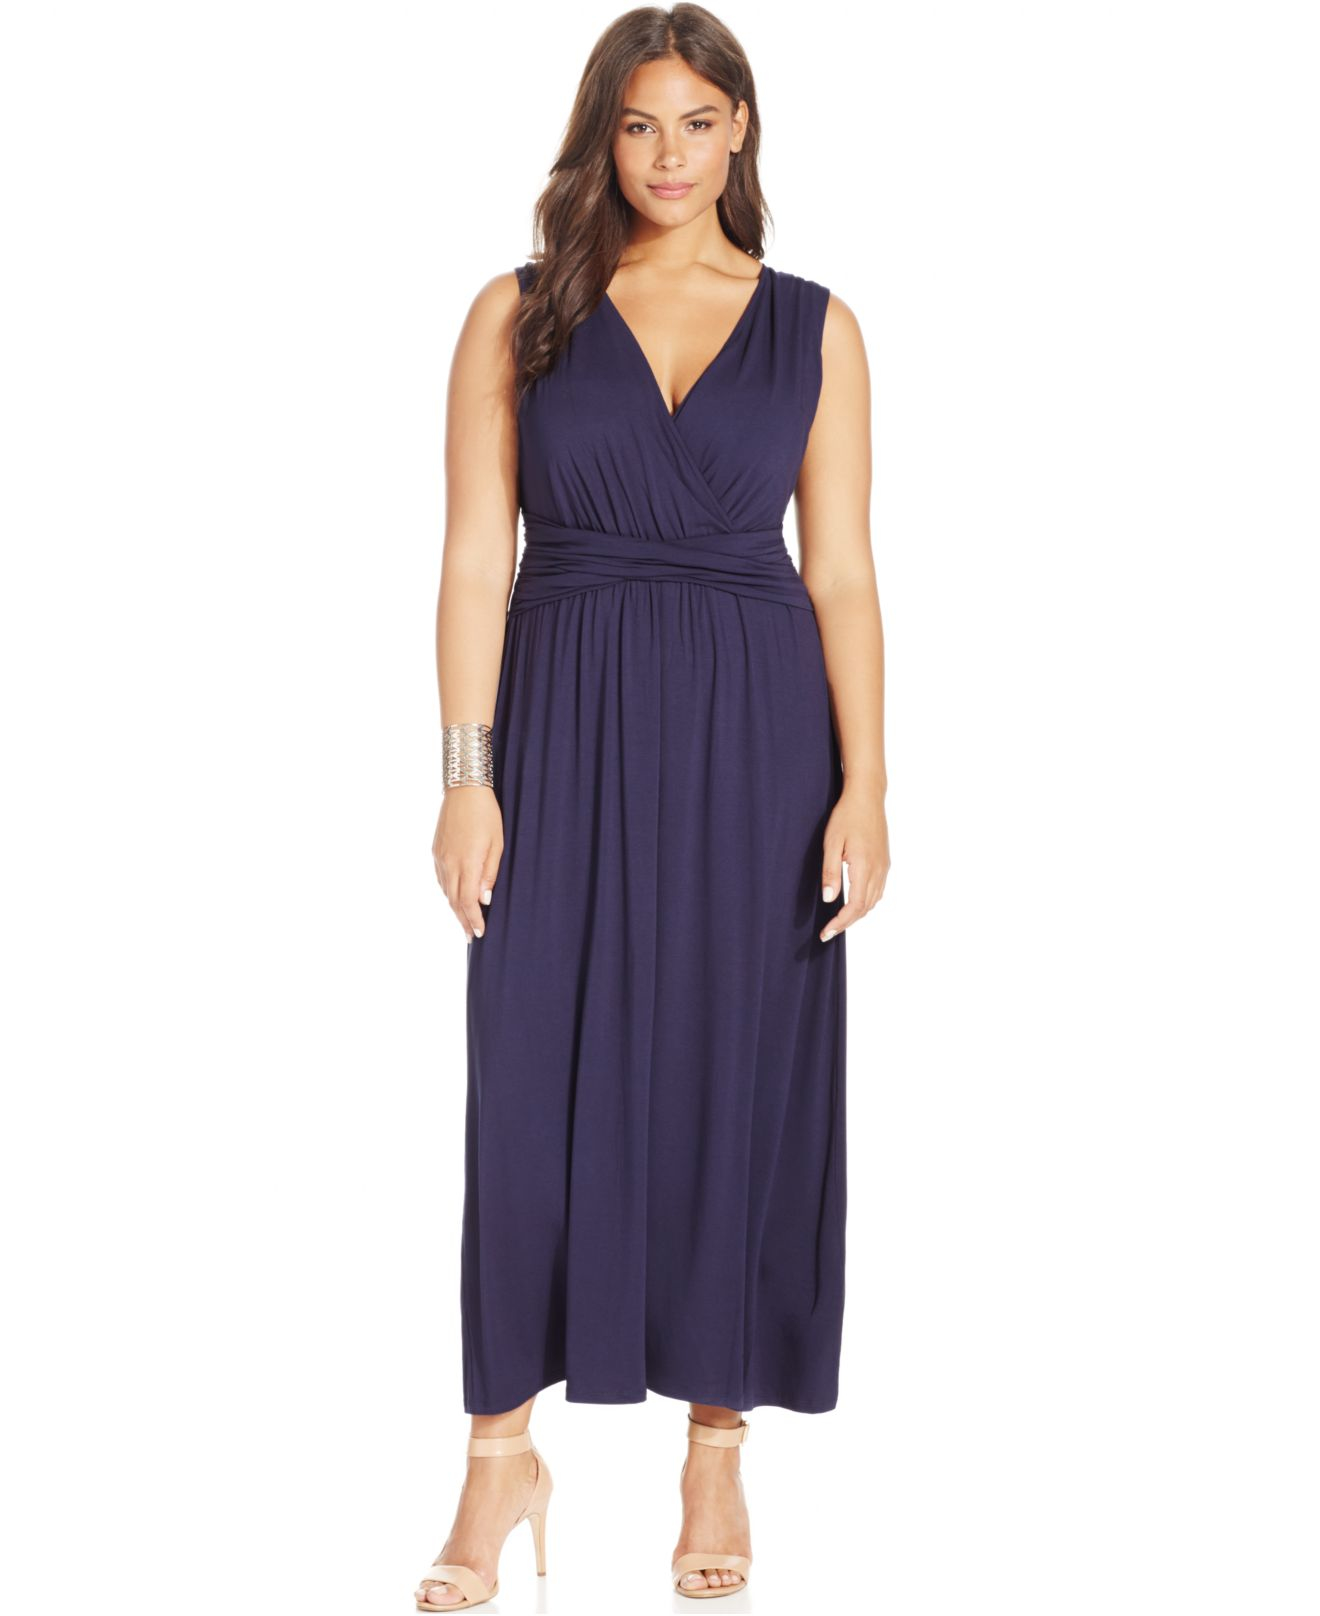 Inc international concepts Plus Size Sleeveless Maxi Dress in Blue